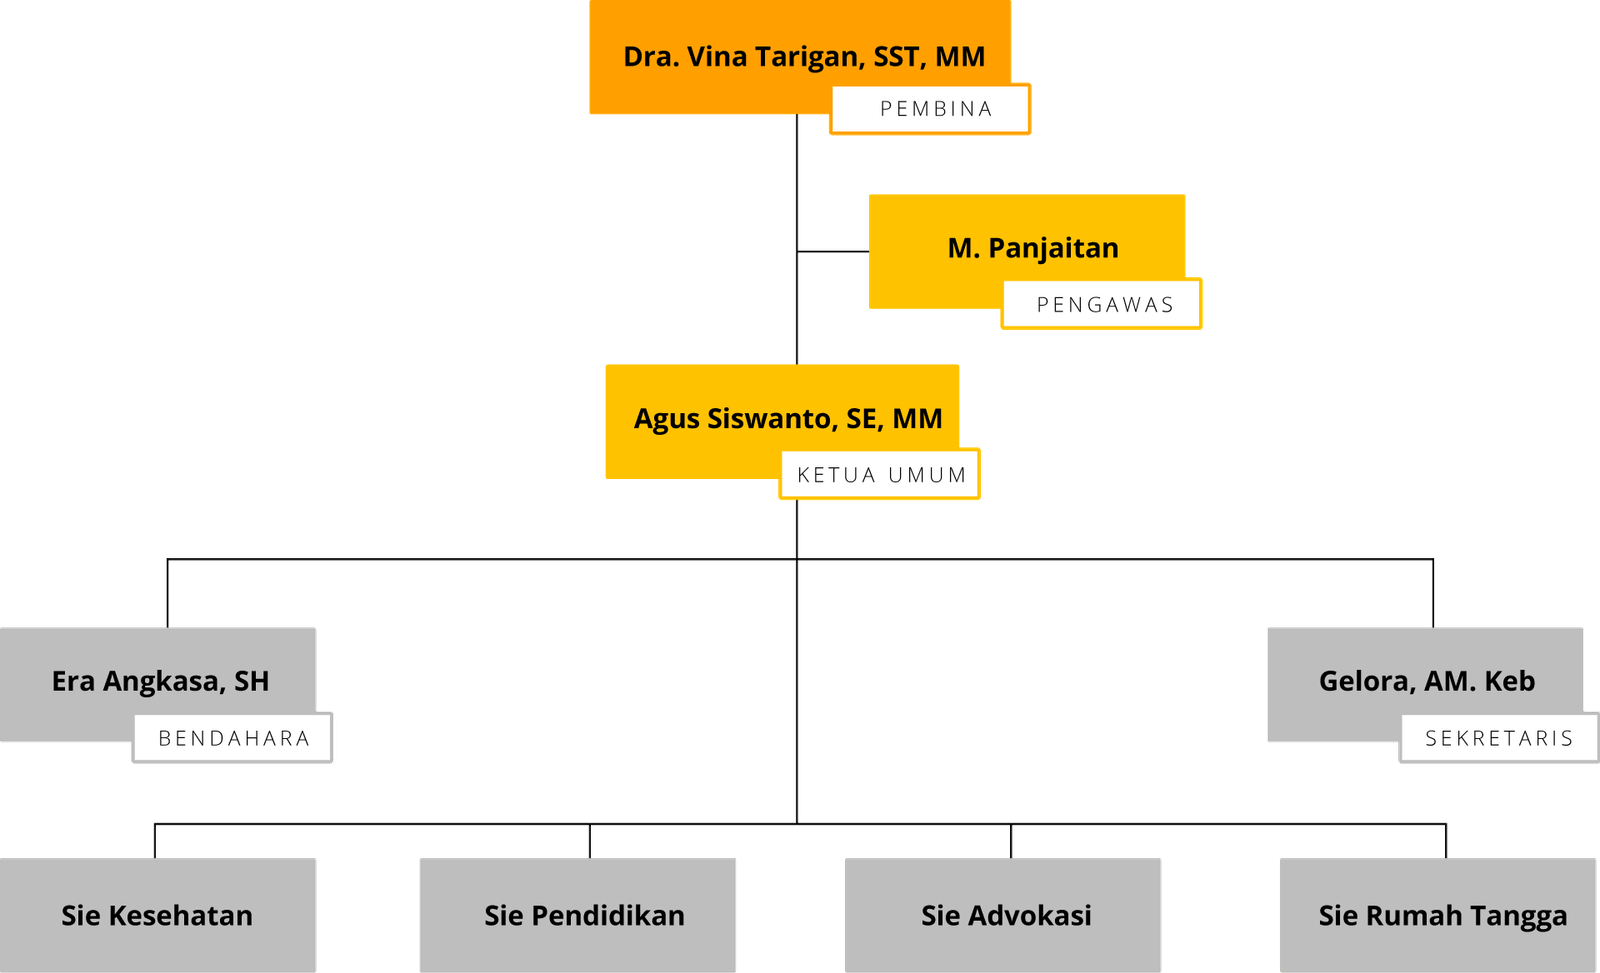 VSE Foundation Orgnanizational Structure